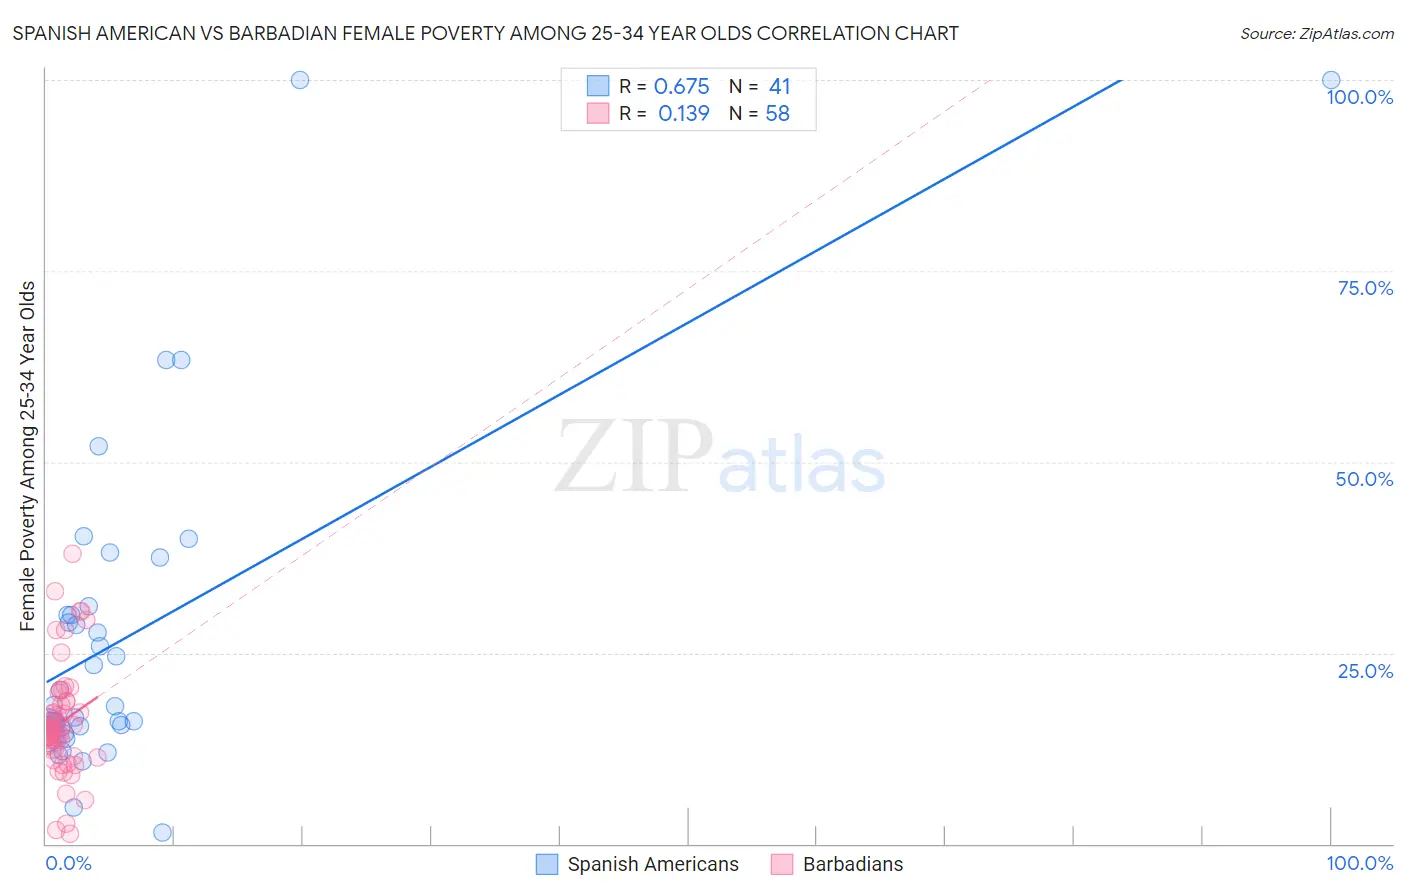 Spanish American vs Barbadian Female Poverty Among 25-34 Year Olds